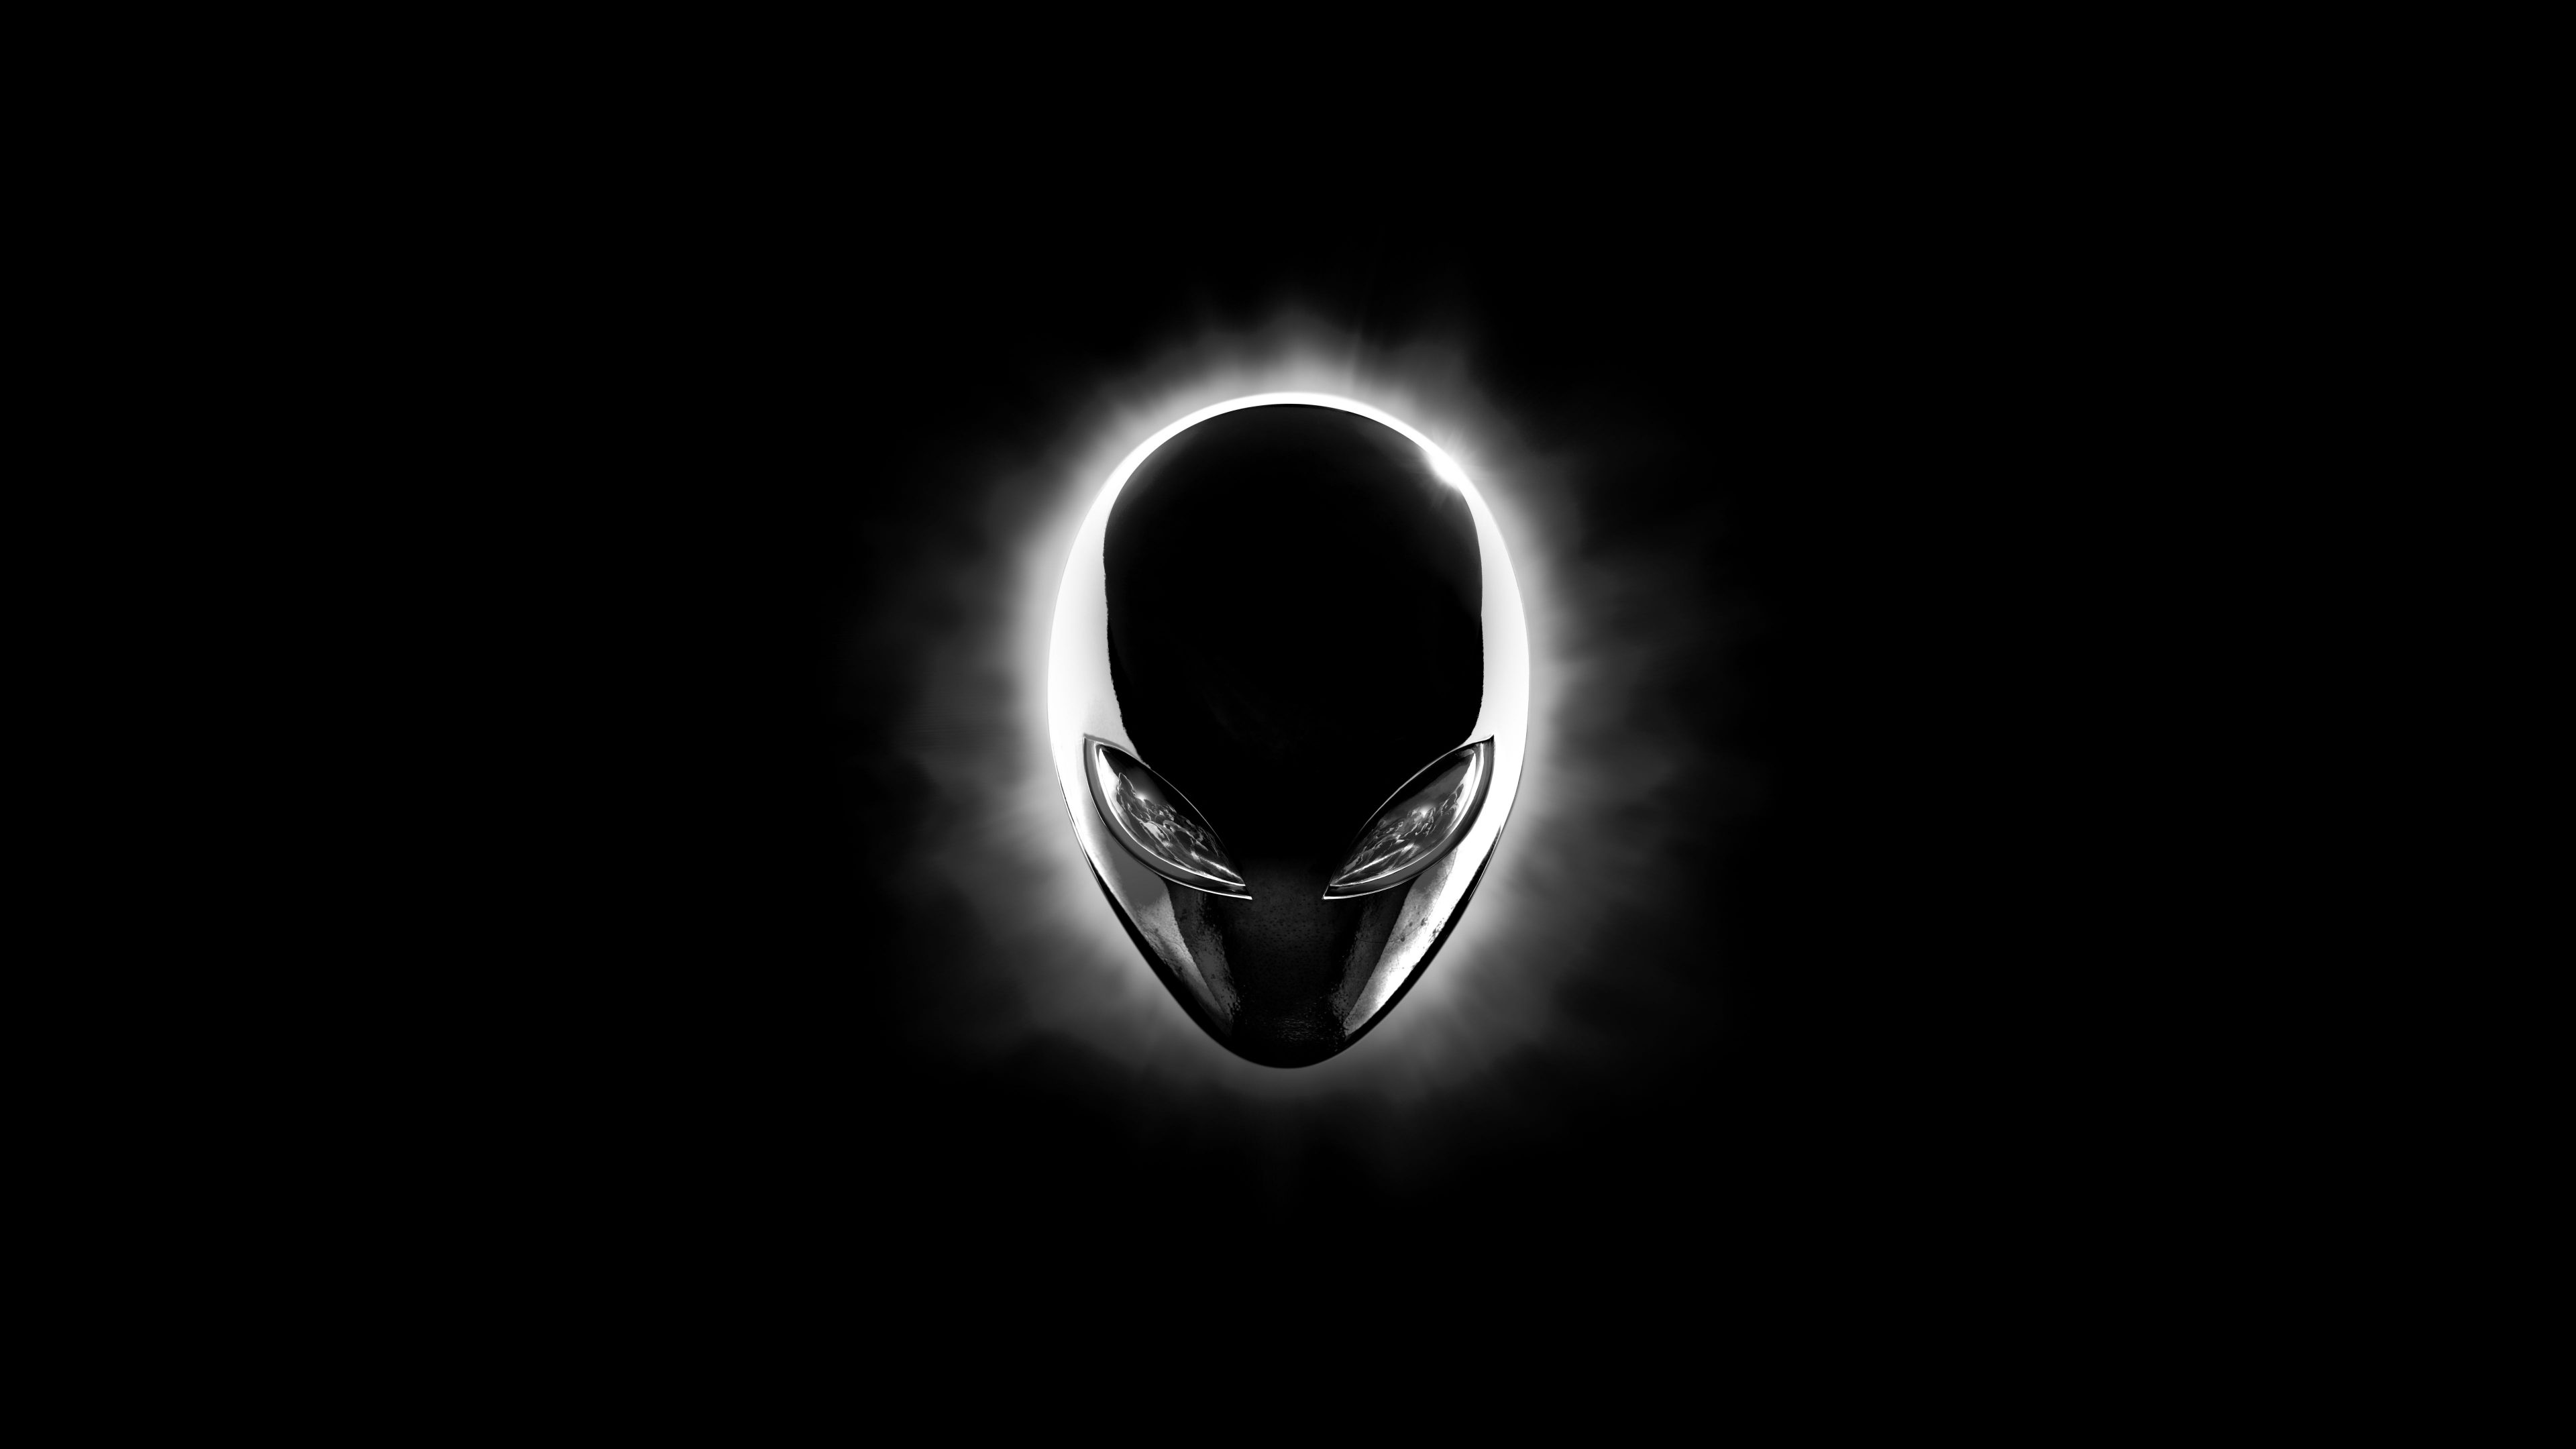 Alienware Eclipse Head (Black) 8K UHD Wallpaper